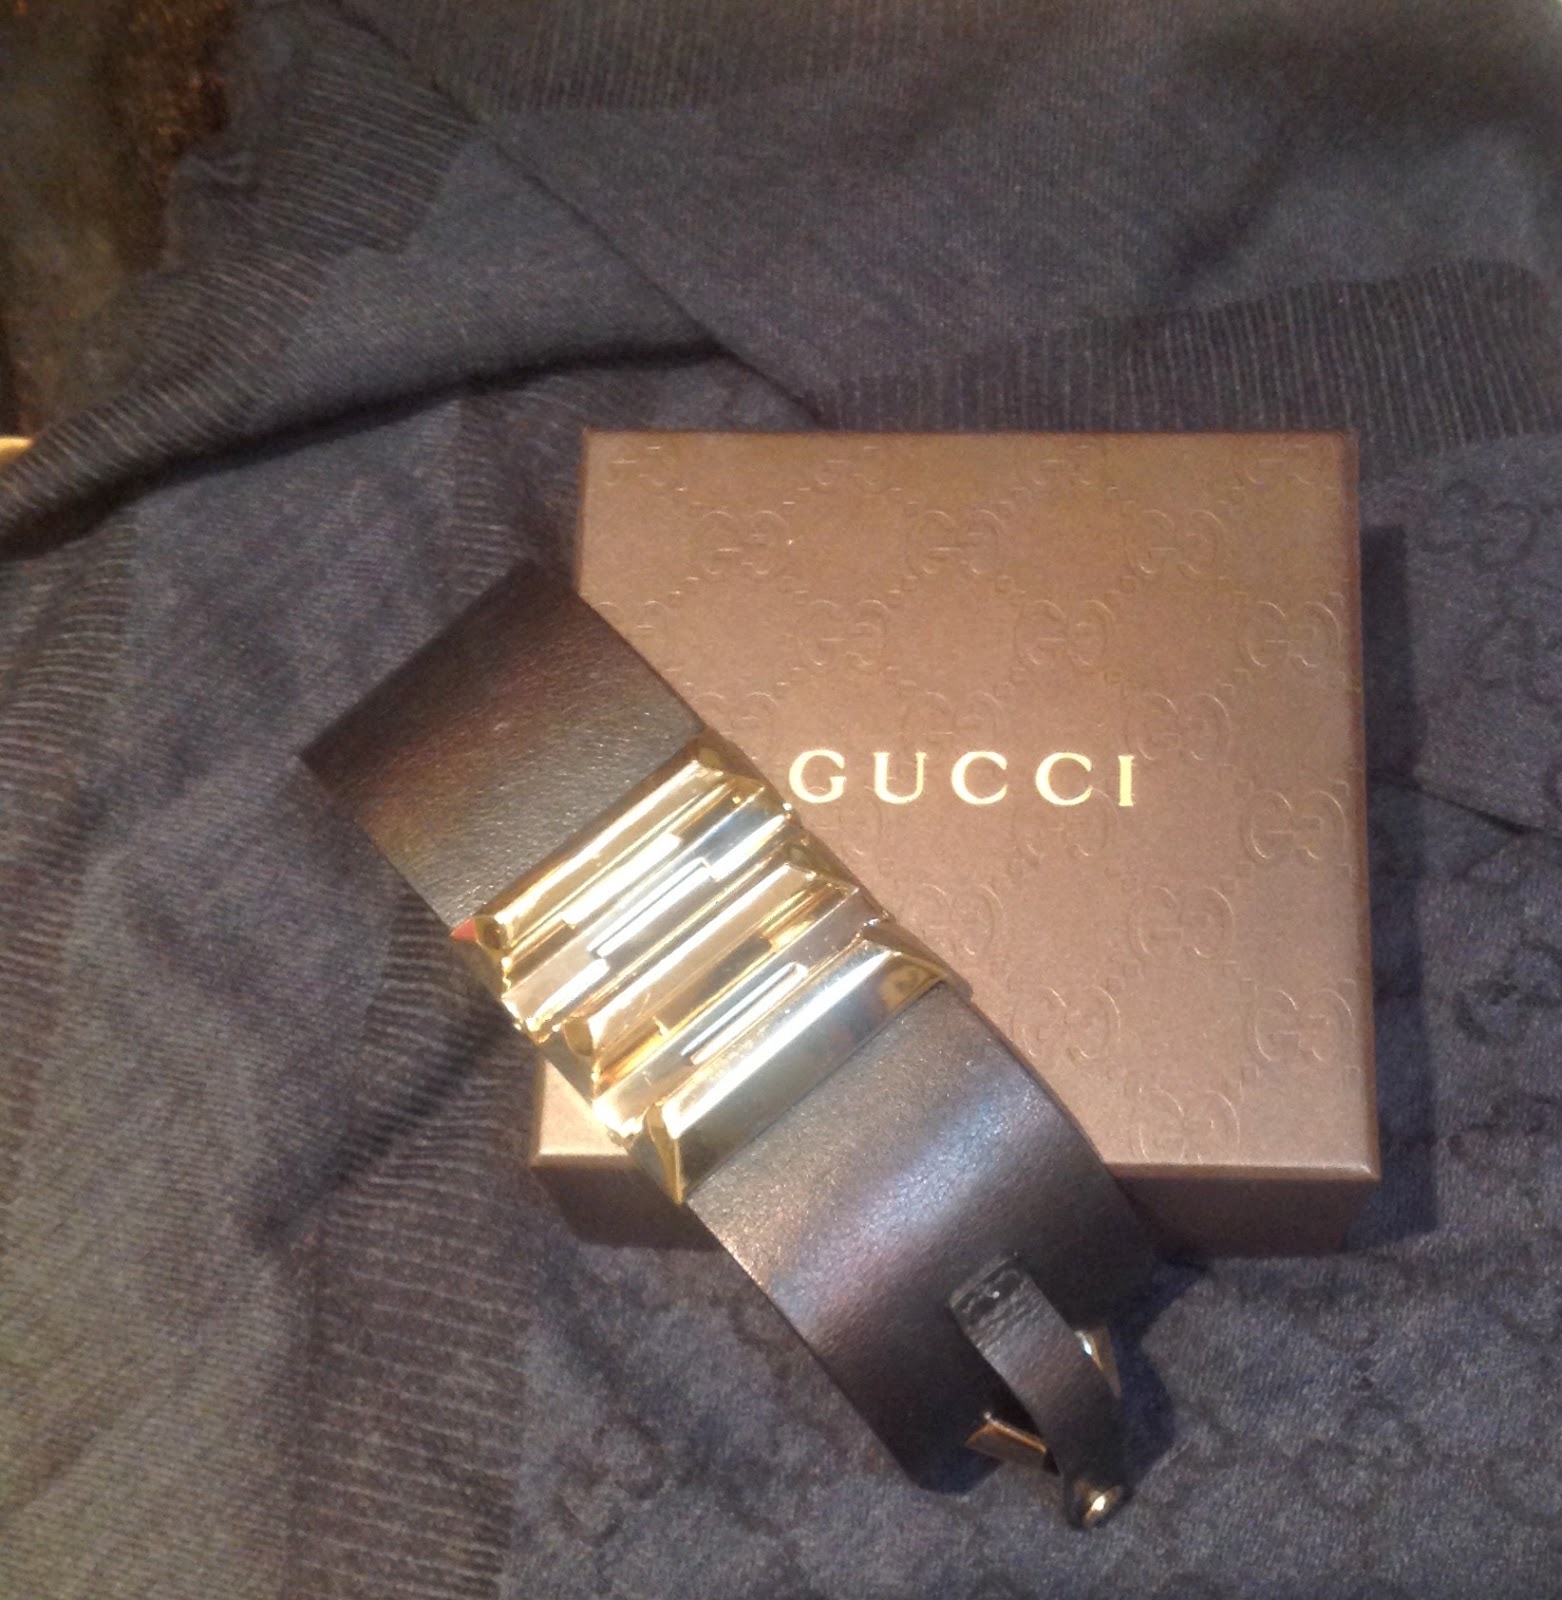 Gucci outlet, Gucci bracelet, Gucci scarf